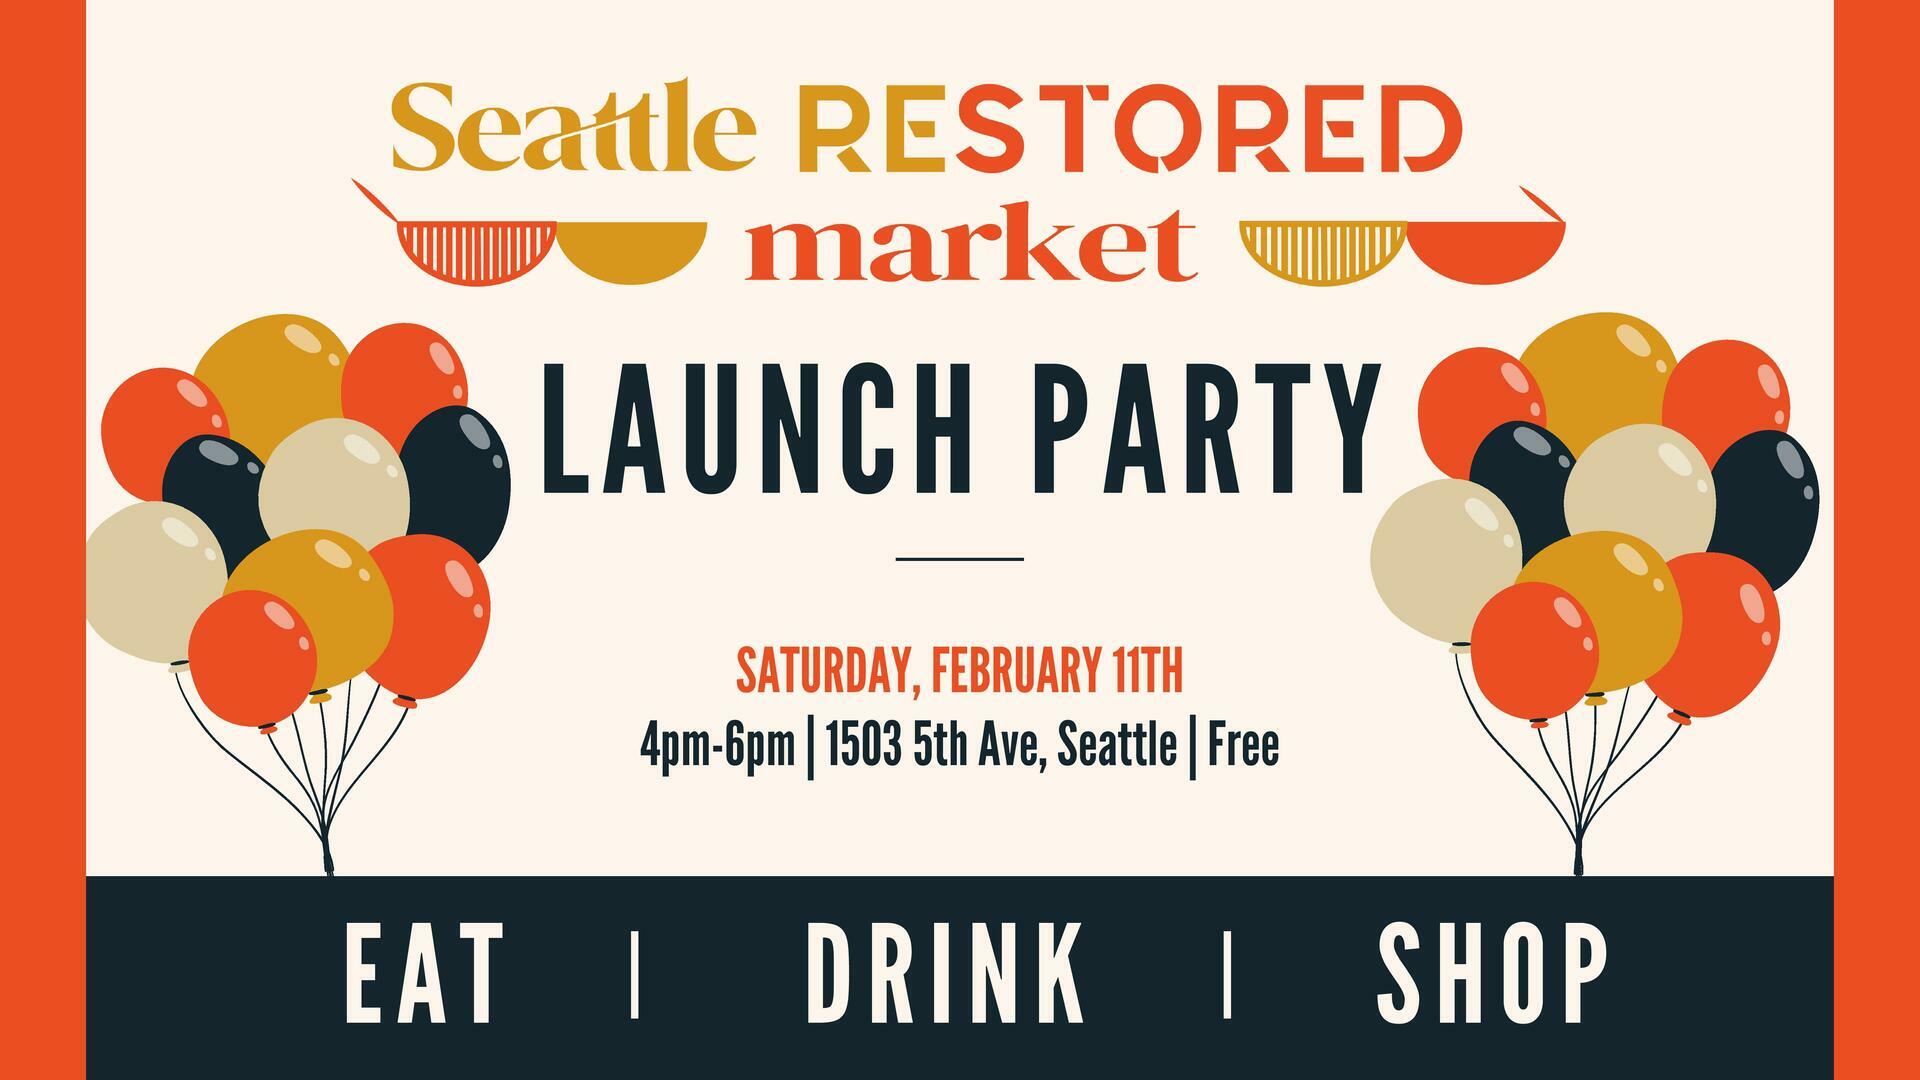 Seattle Restored Market Launch Party, Seattle, Washington, United States